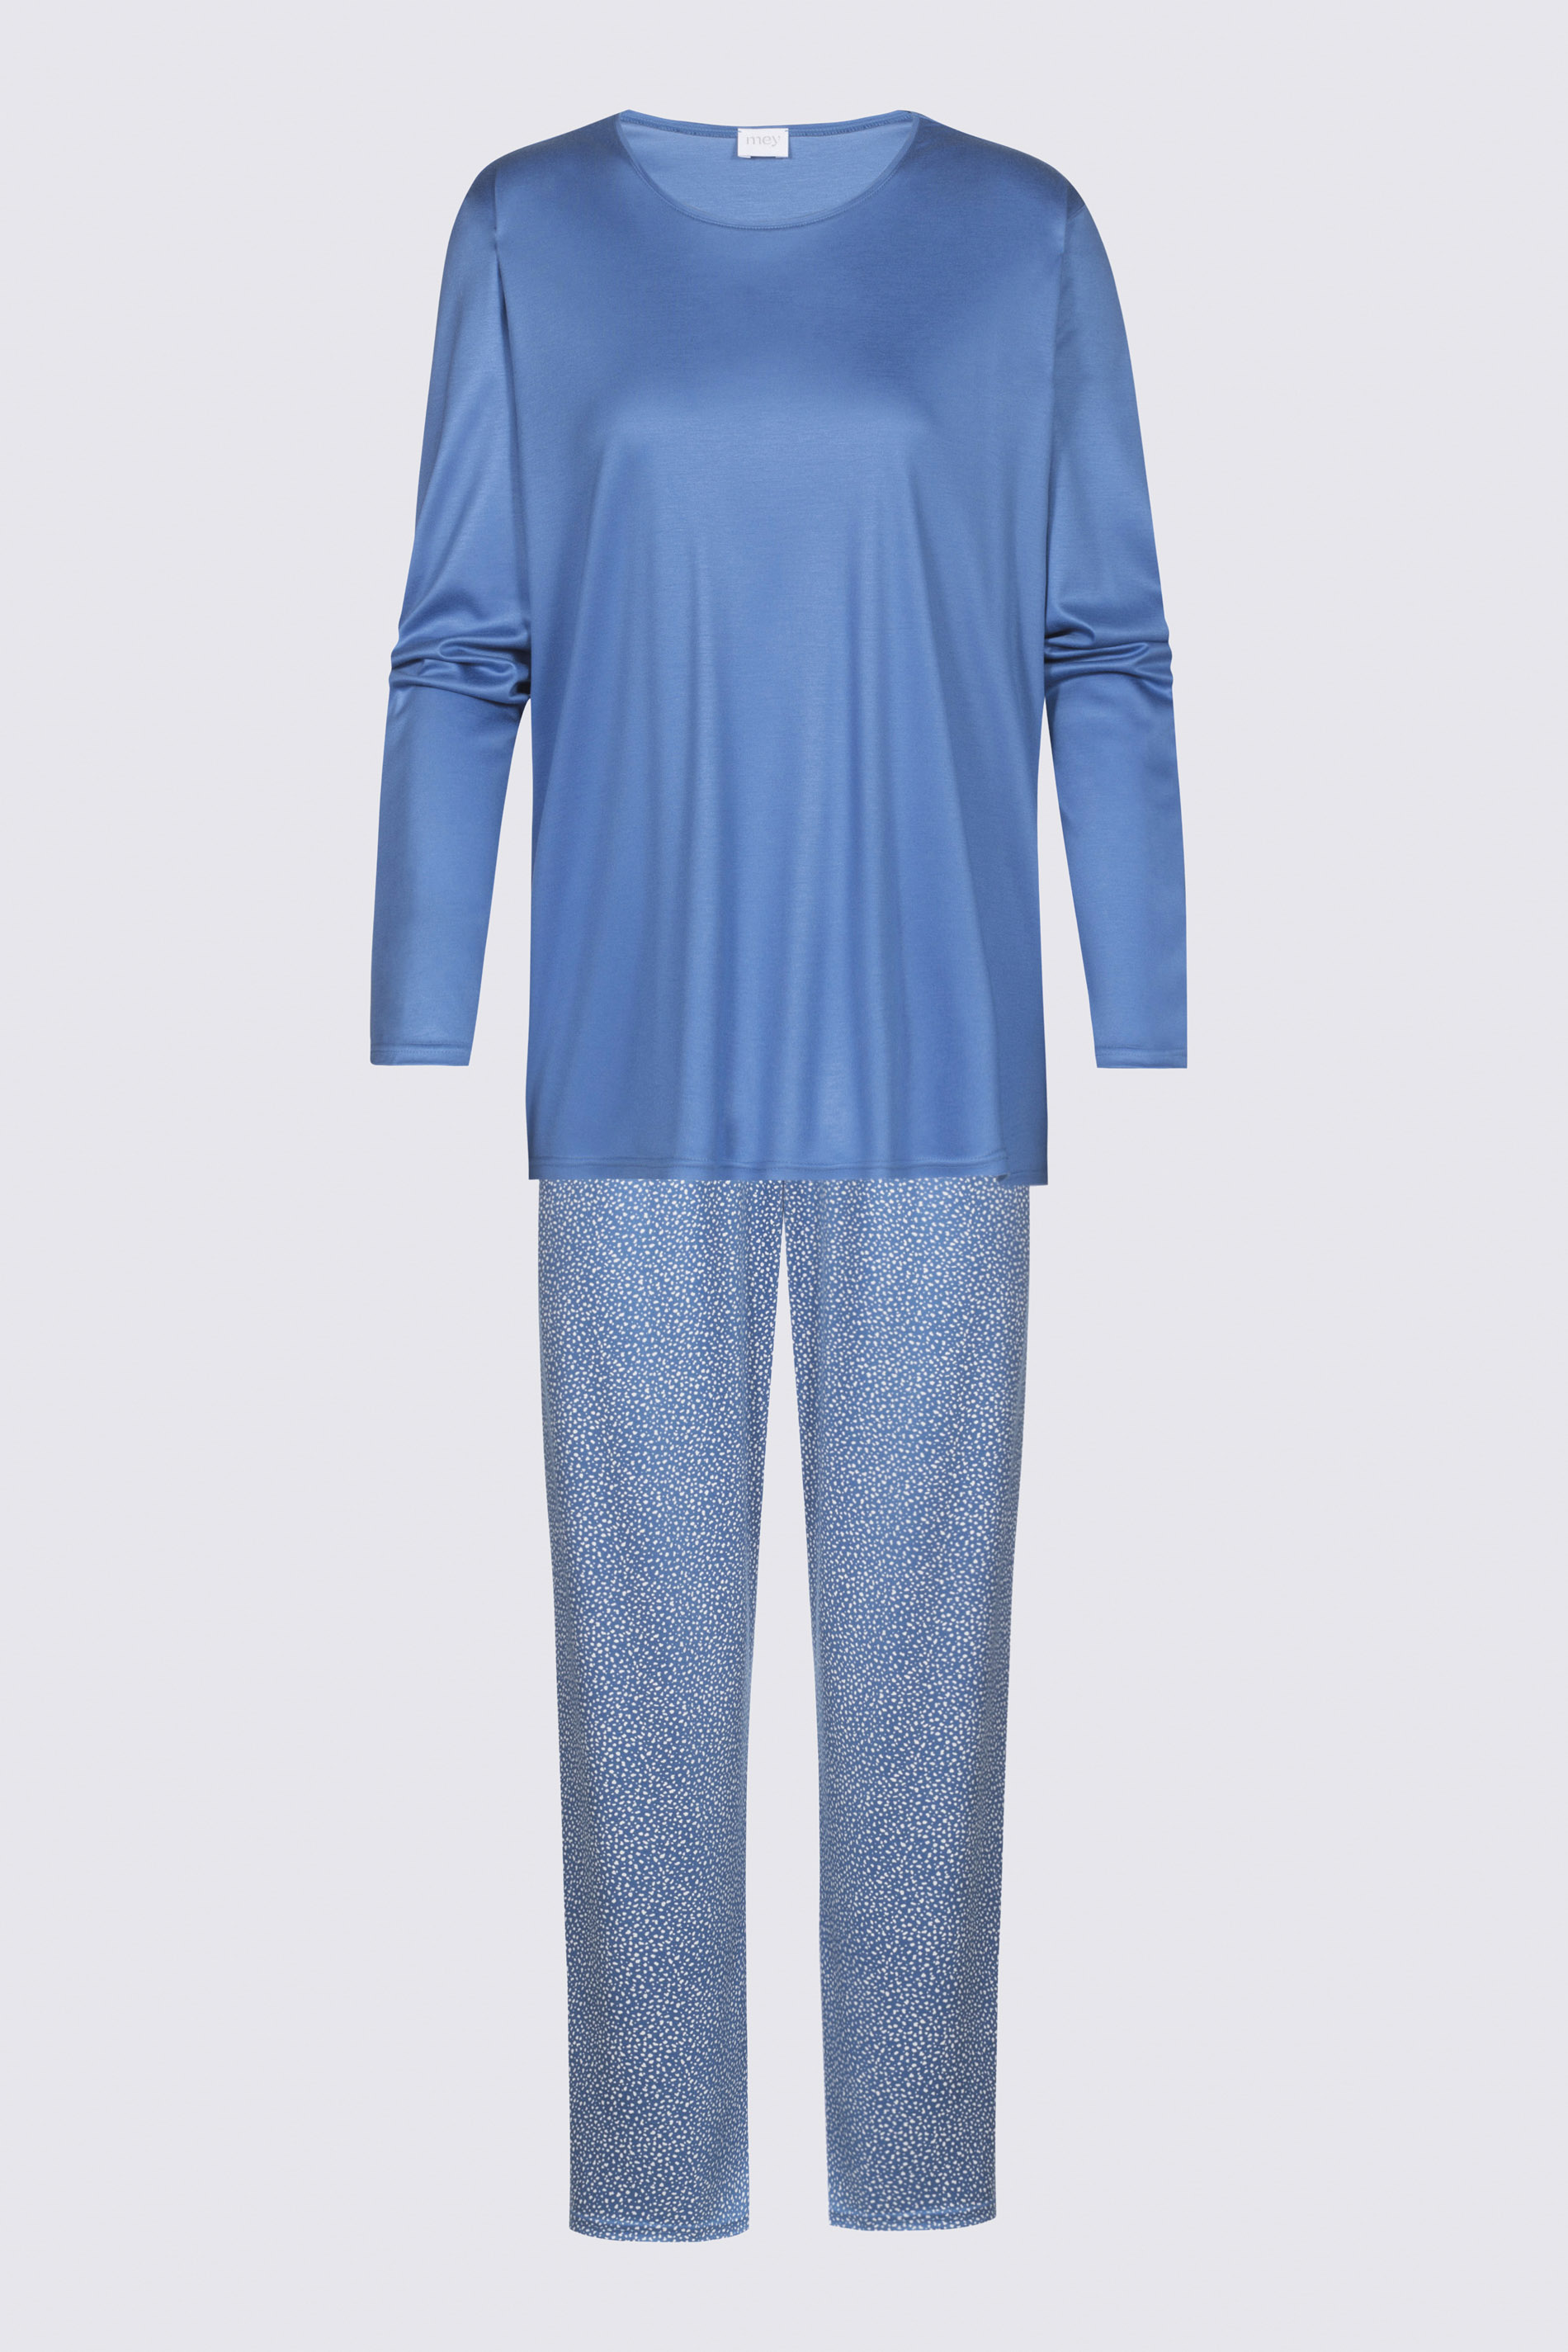 Pyjama in 7/8-Länge Ocean Blue Serie Elouisa Freisteller | mey®